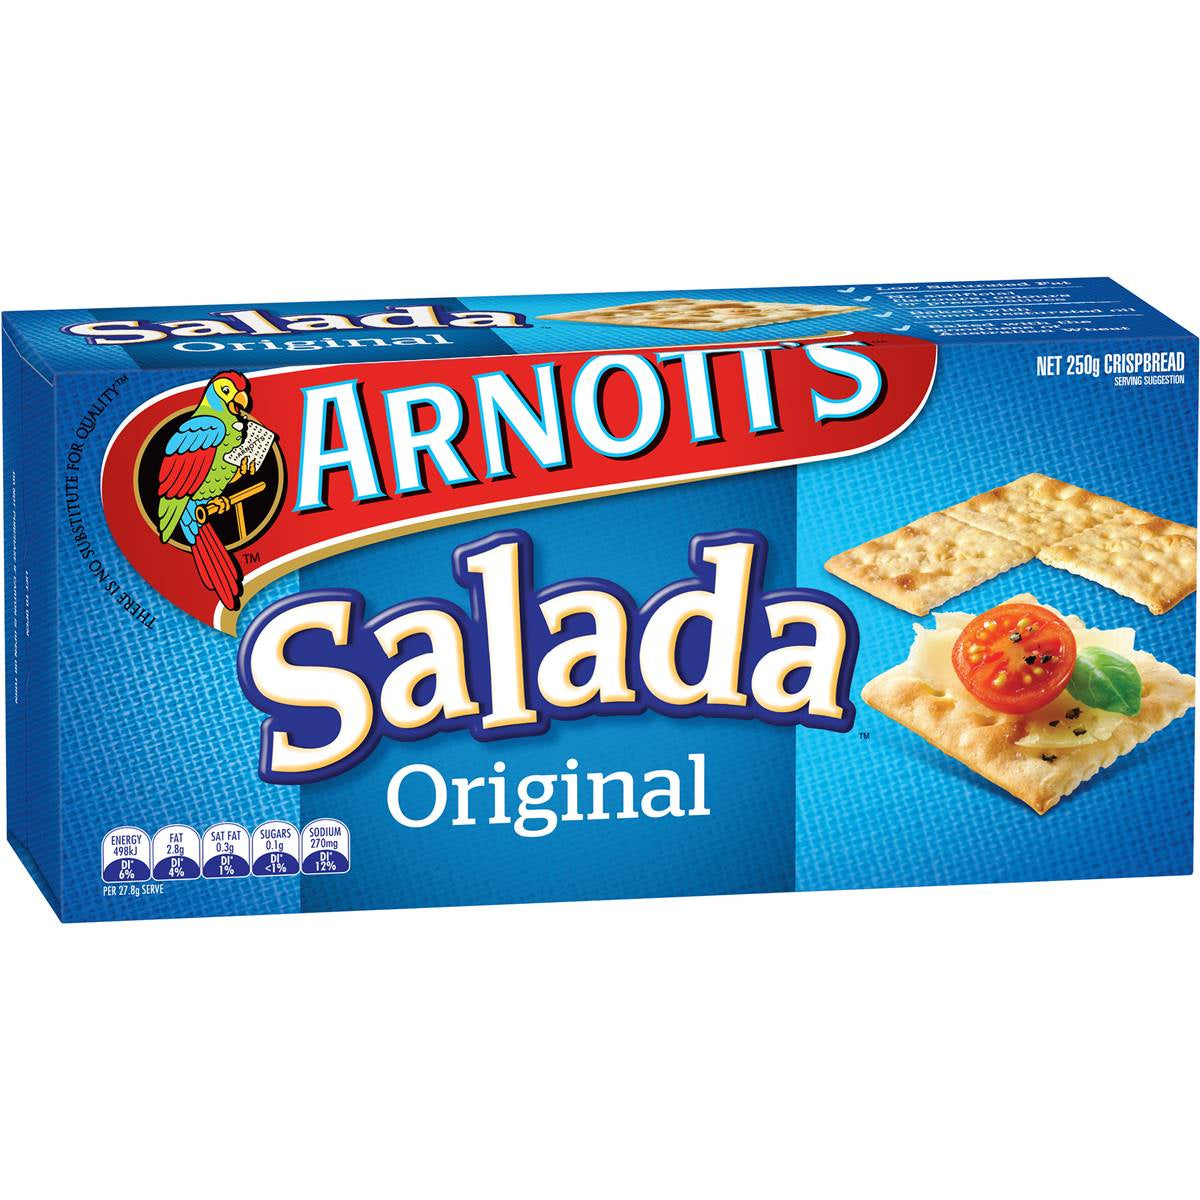 Arnotts Salada Original 250g **